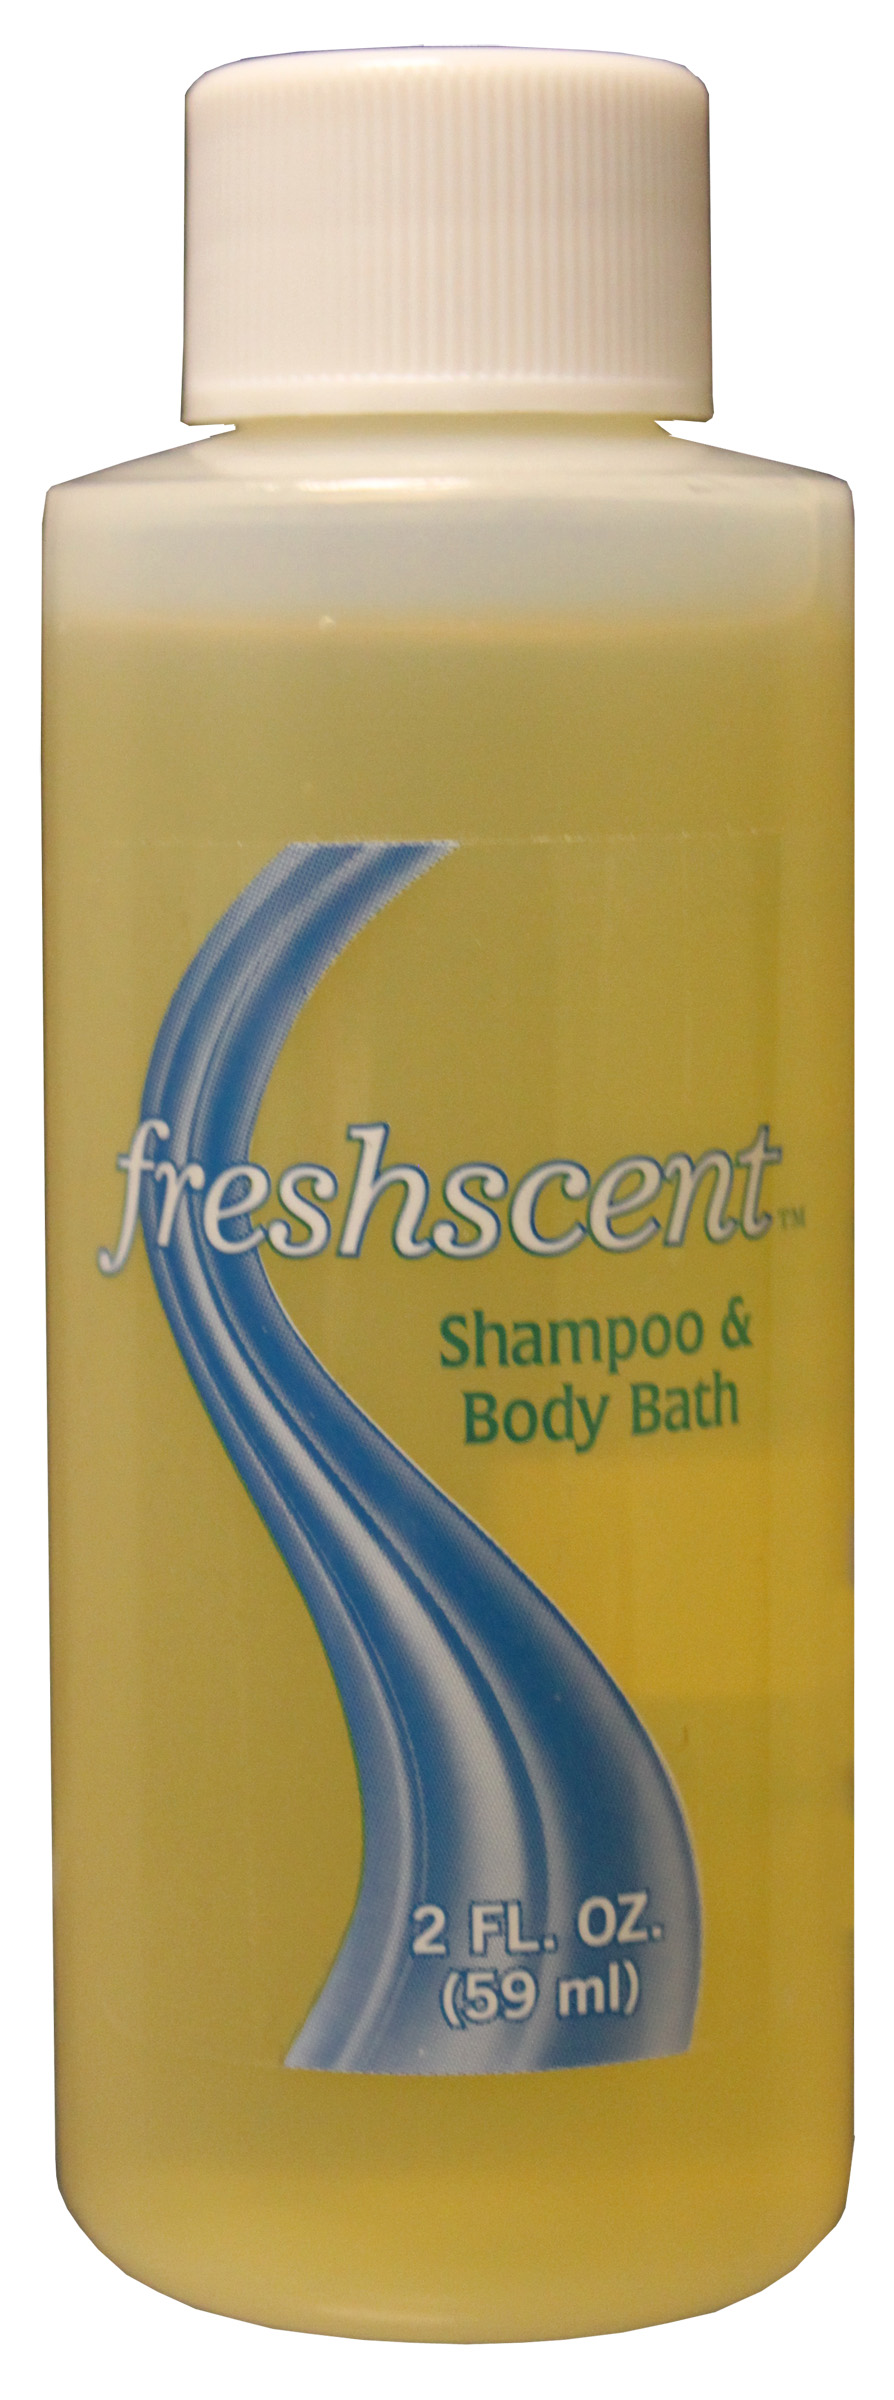 Freshscent 2 oz. SHAMPOO & Body Wash (Clear Bottle)